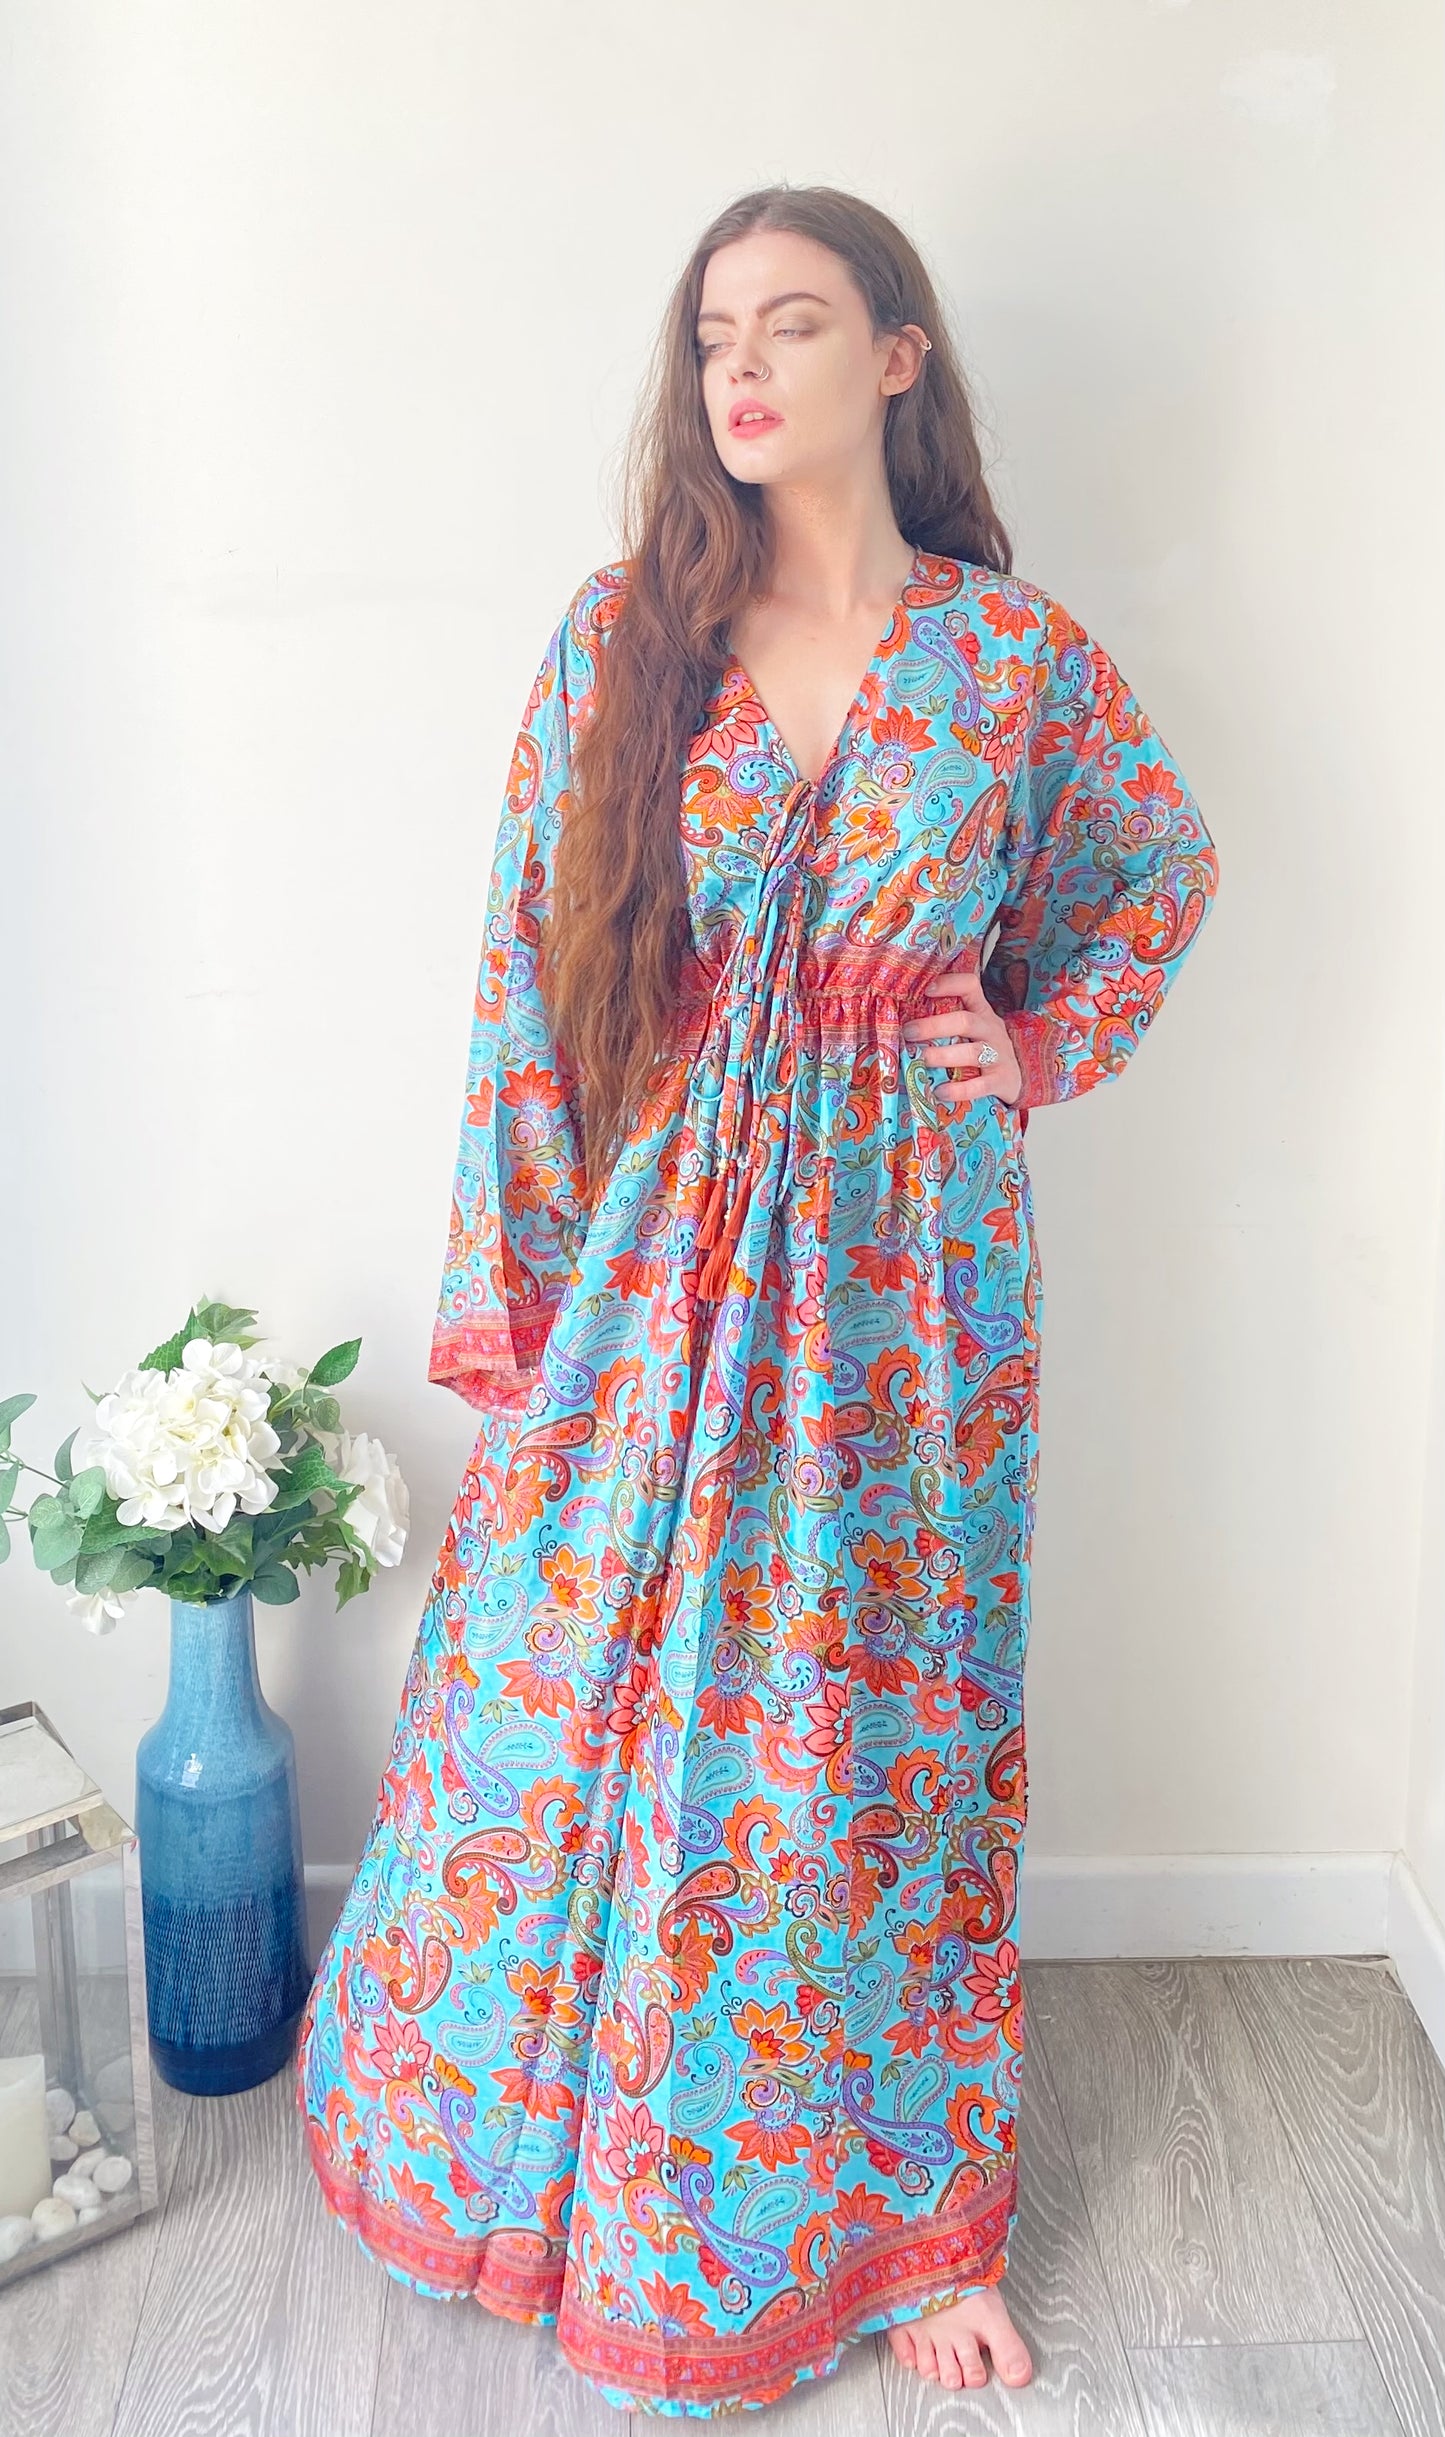 Nova blue red floral print silk maxi dress free size UK8-16